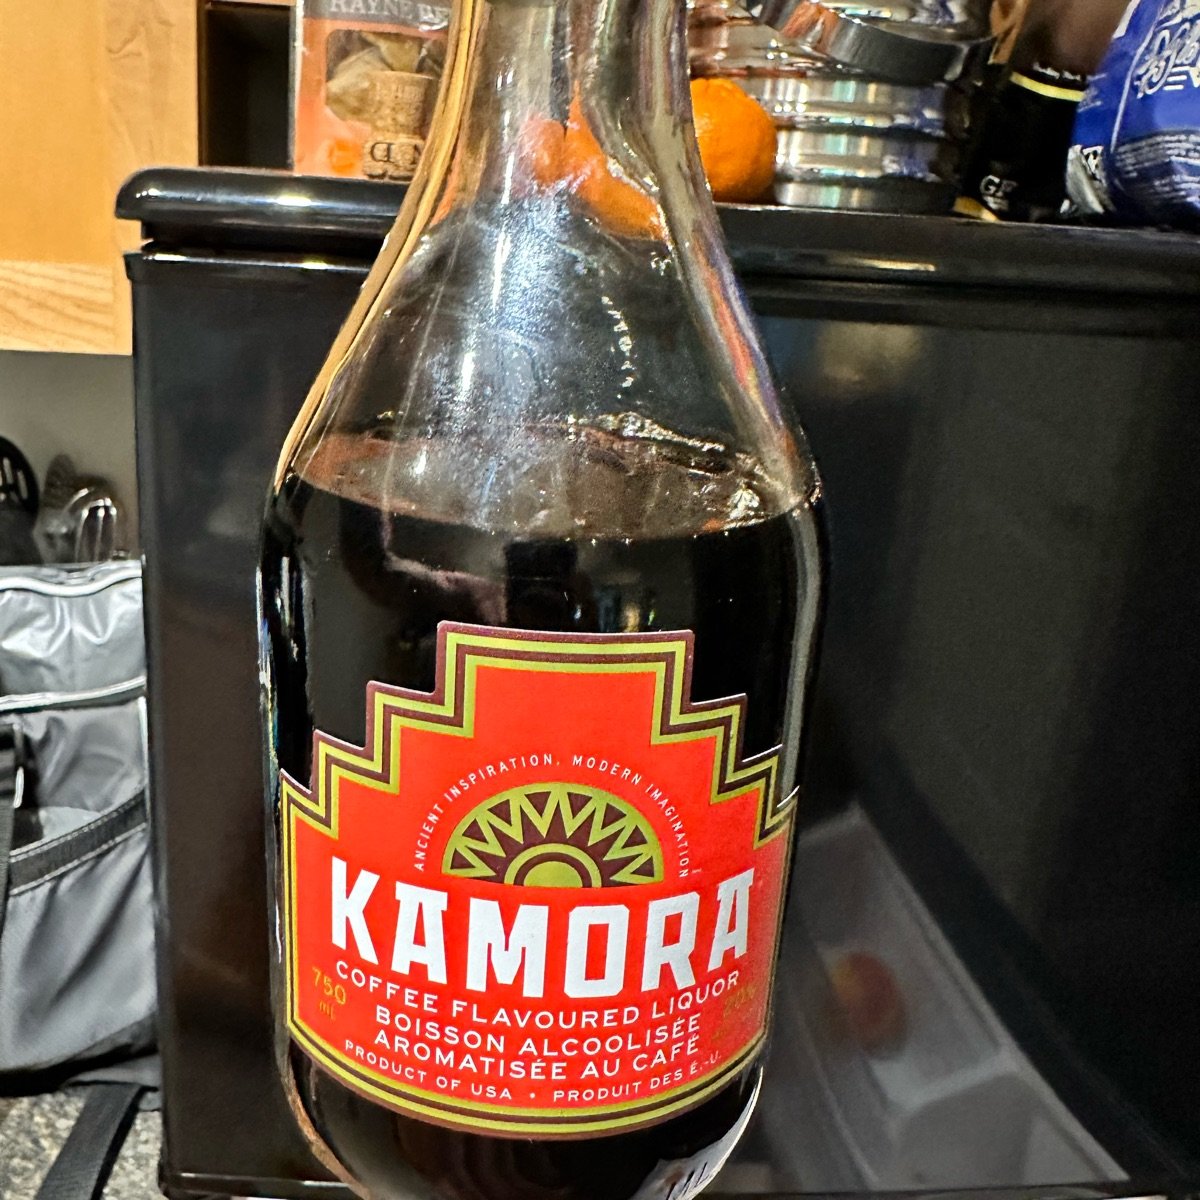 Kamora Kamora - Coffee Flavoured Liquor Reviews | abillion